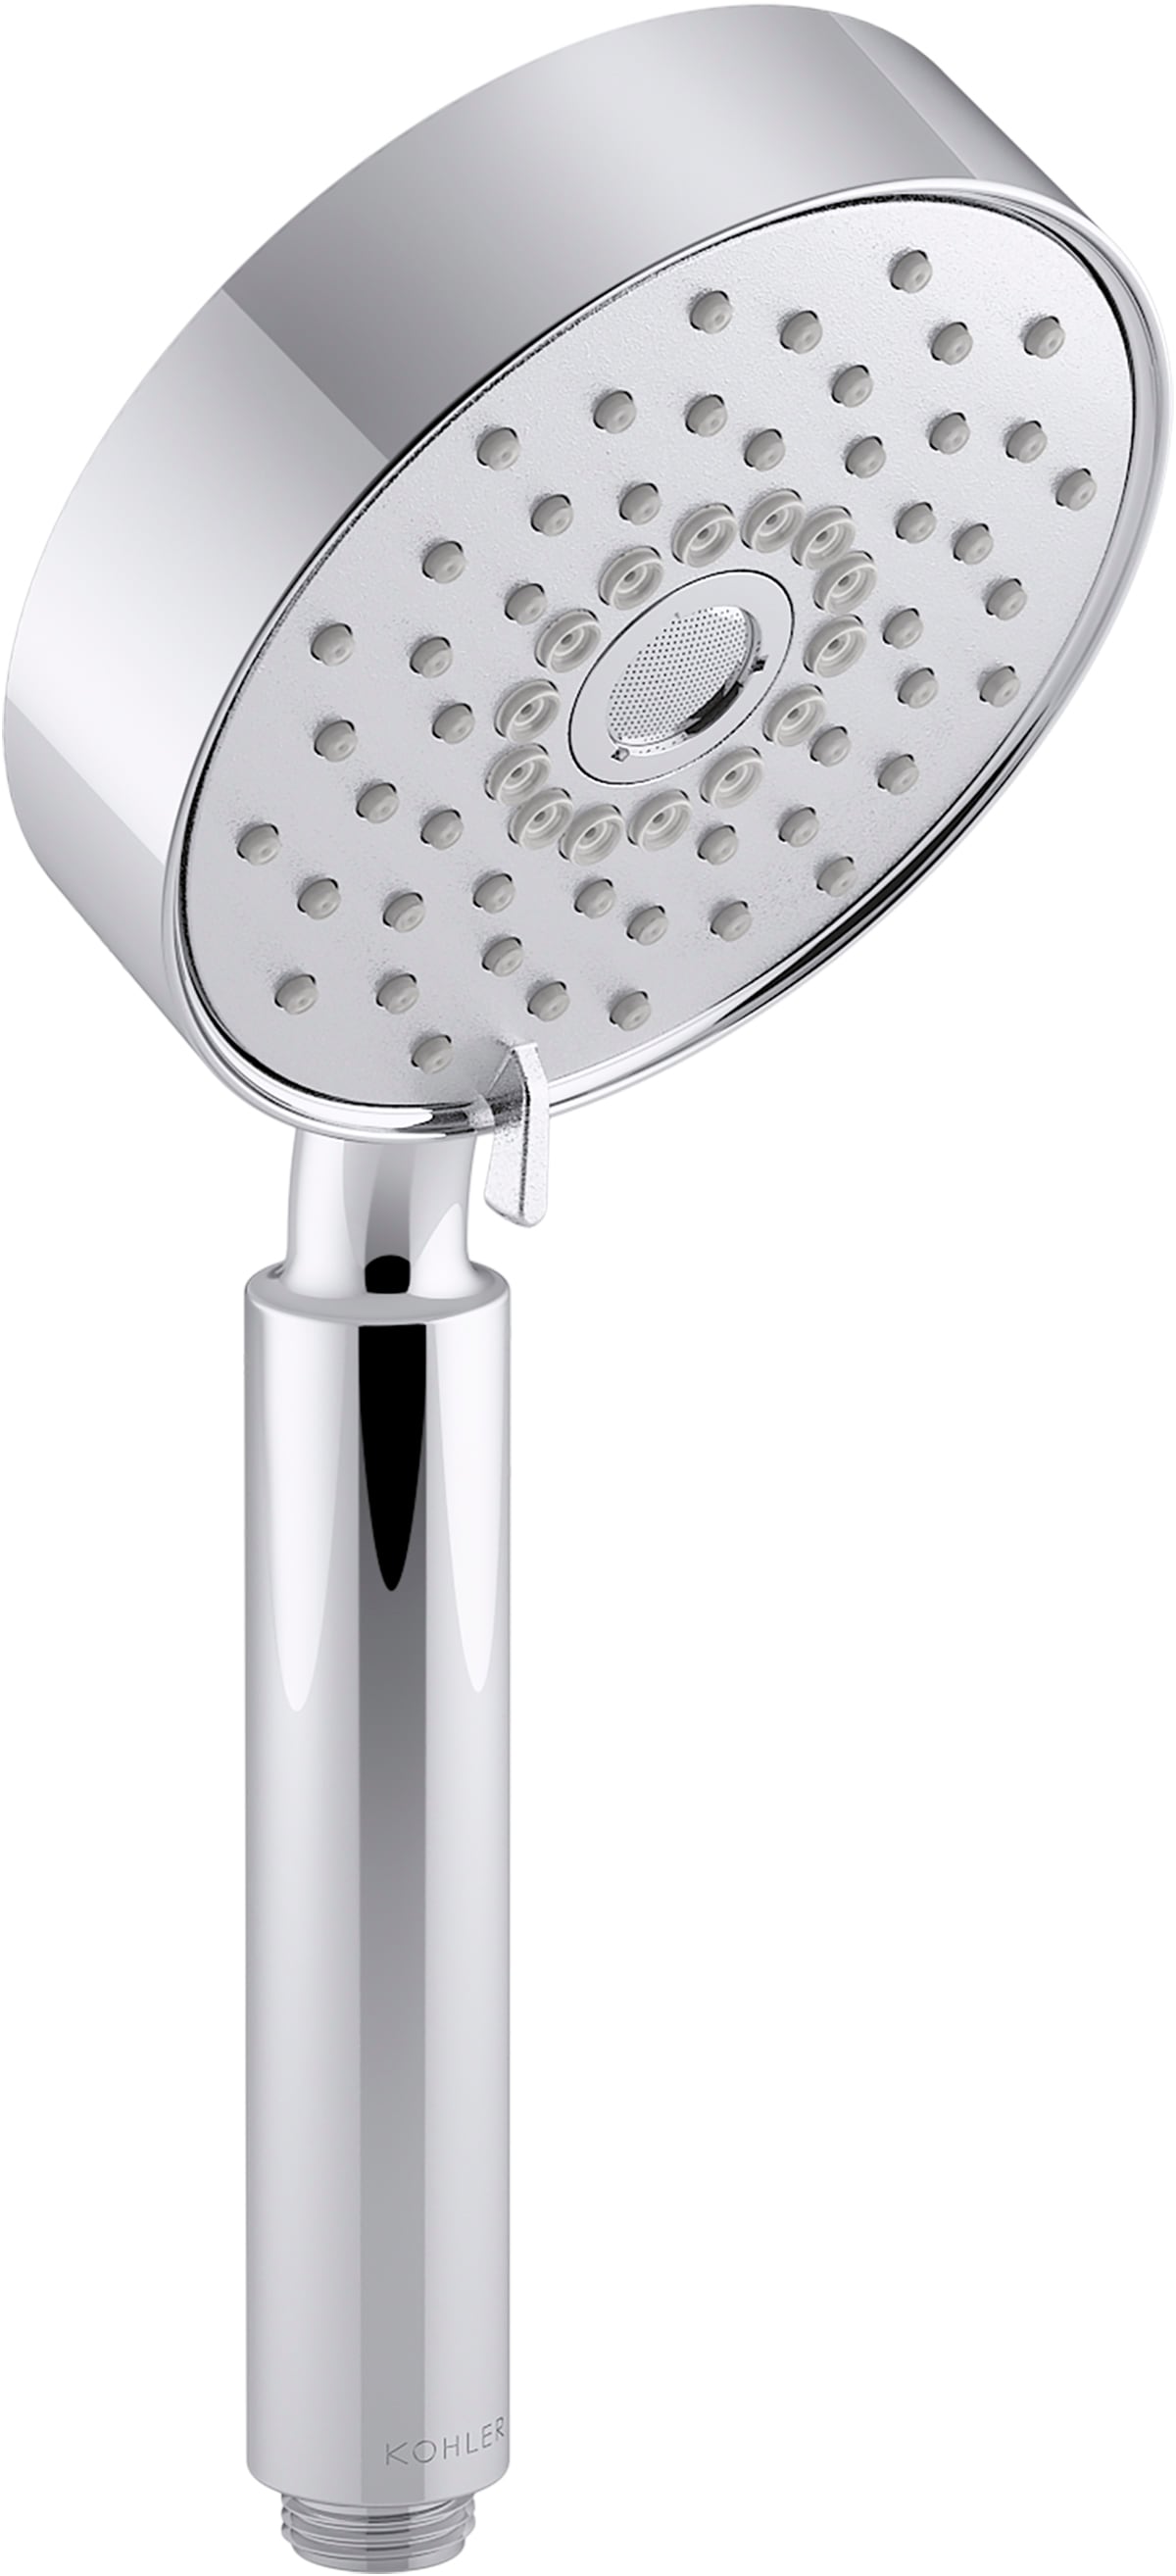 KOHLER Purist Polished Chrome Handheld Shower Head 2.5-GPM (9.5 